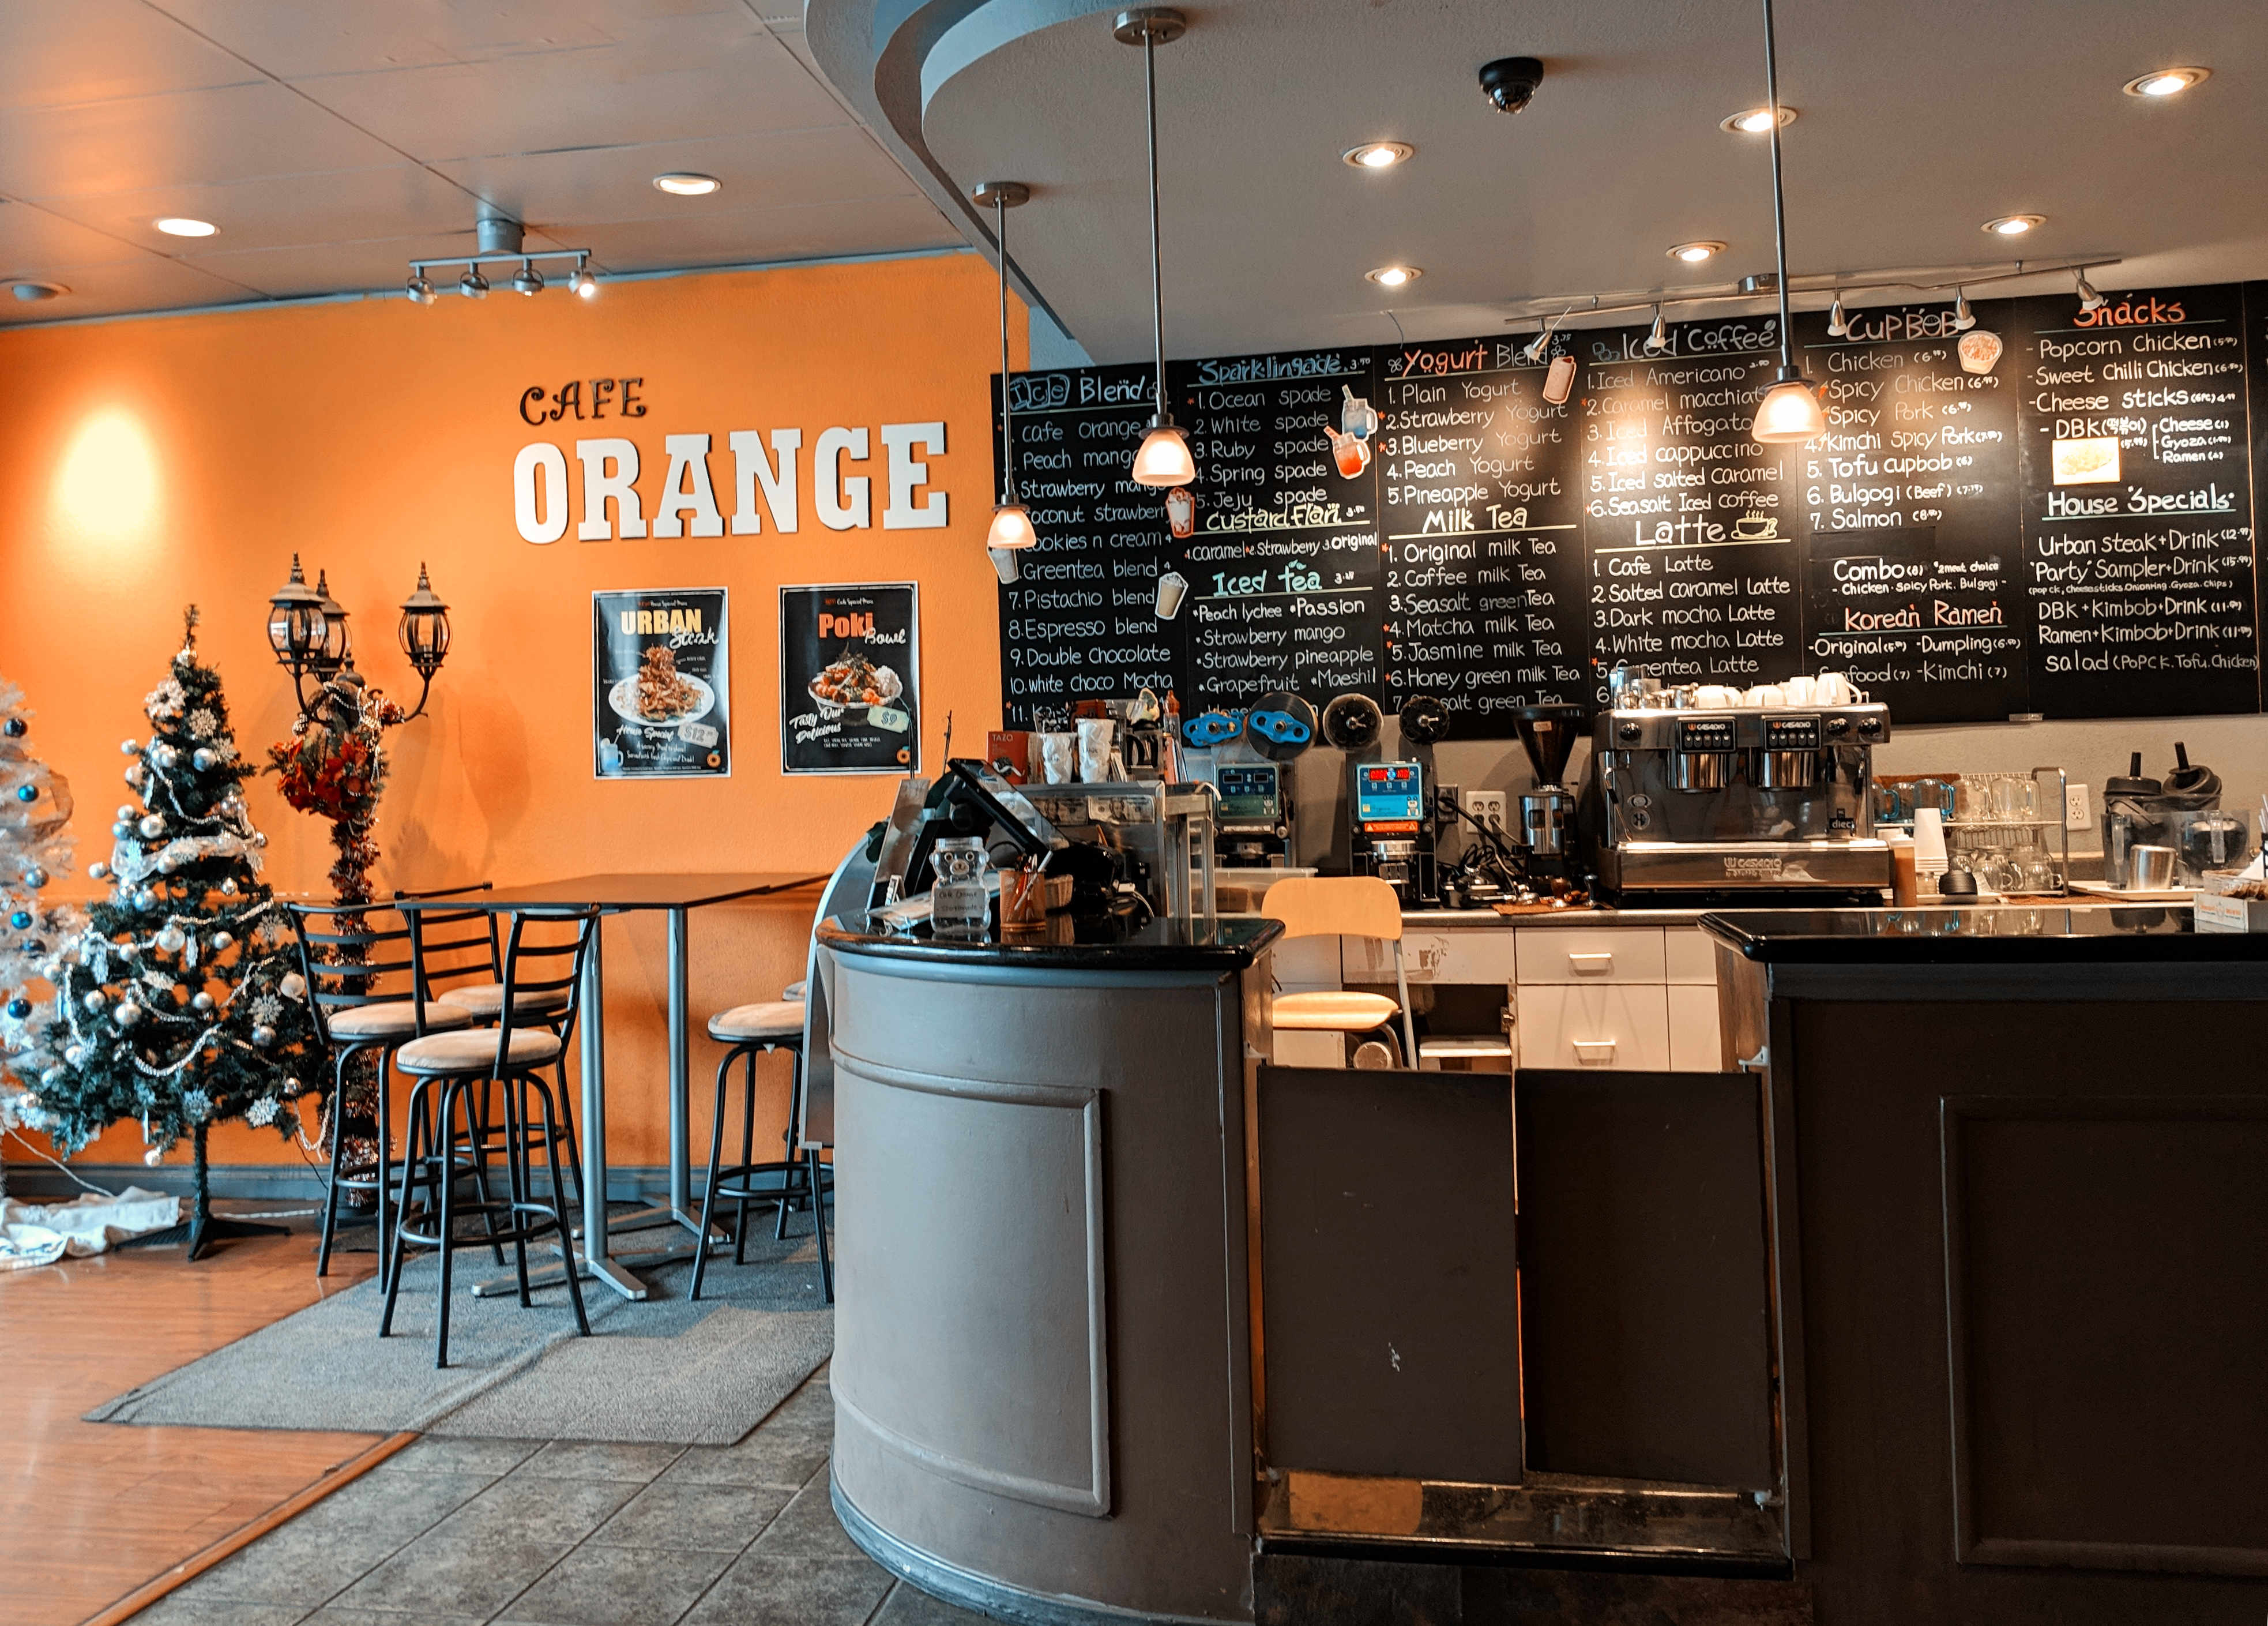 Cafe Orange - Ordering Counter